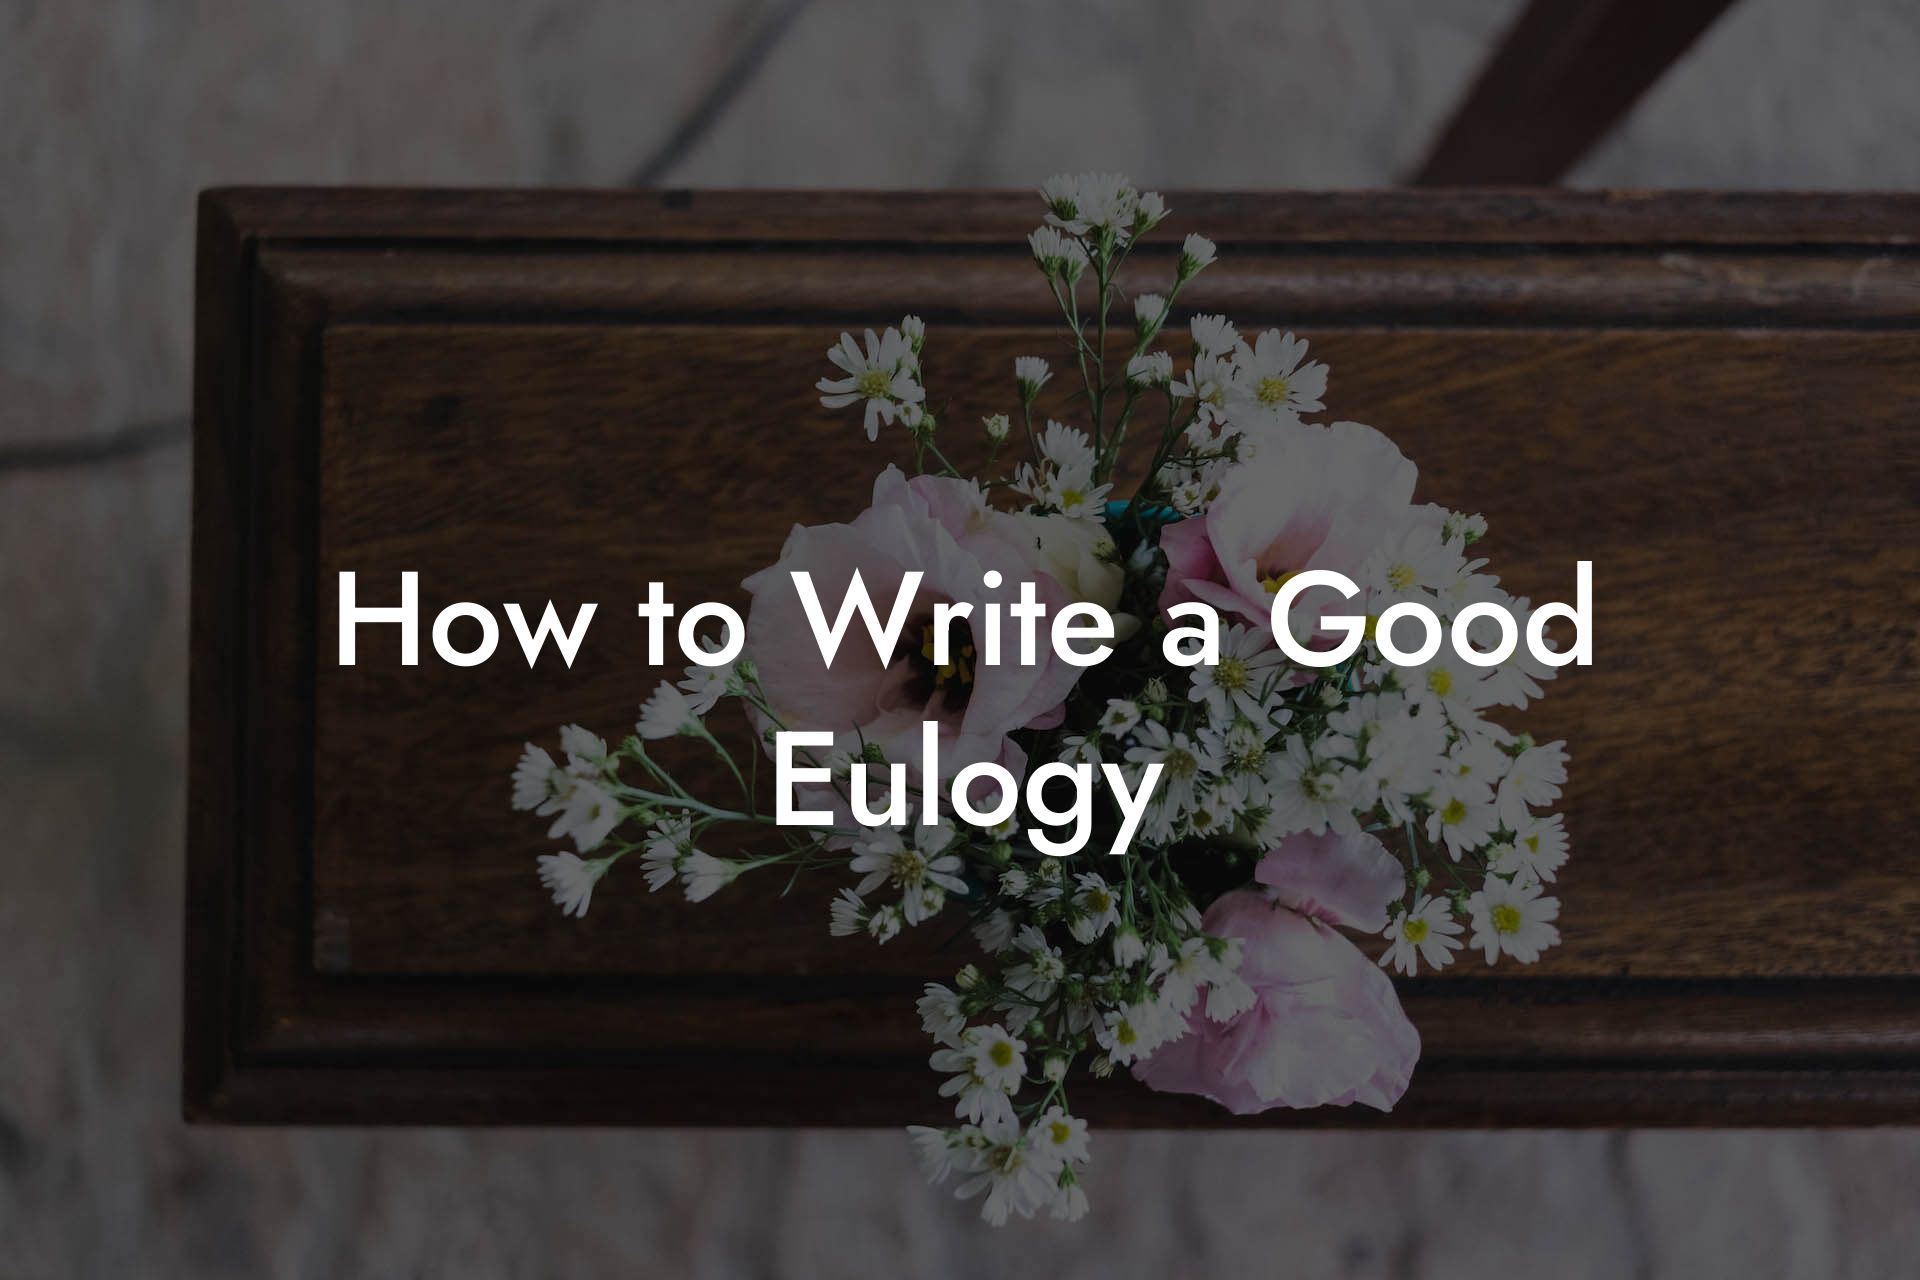 How to Write a Good Eulogy